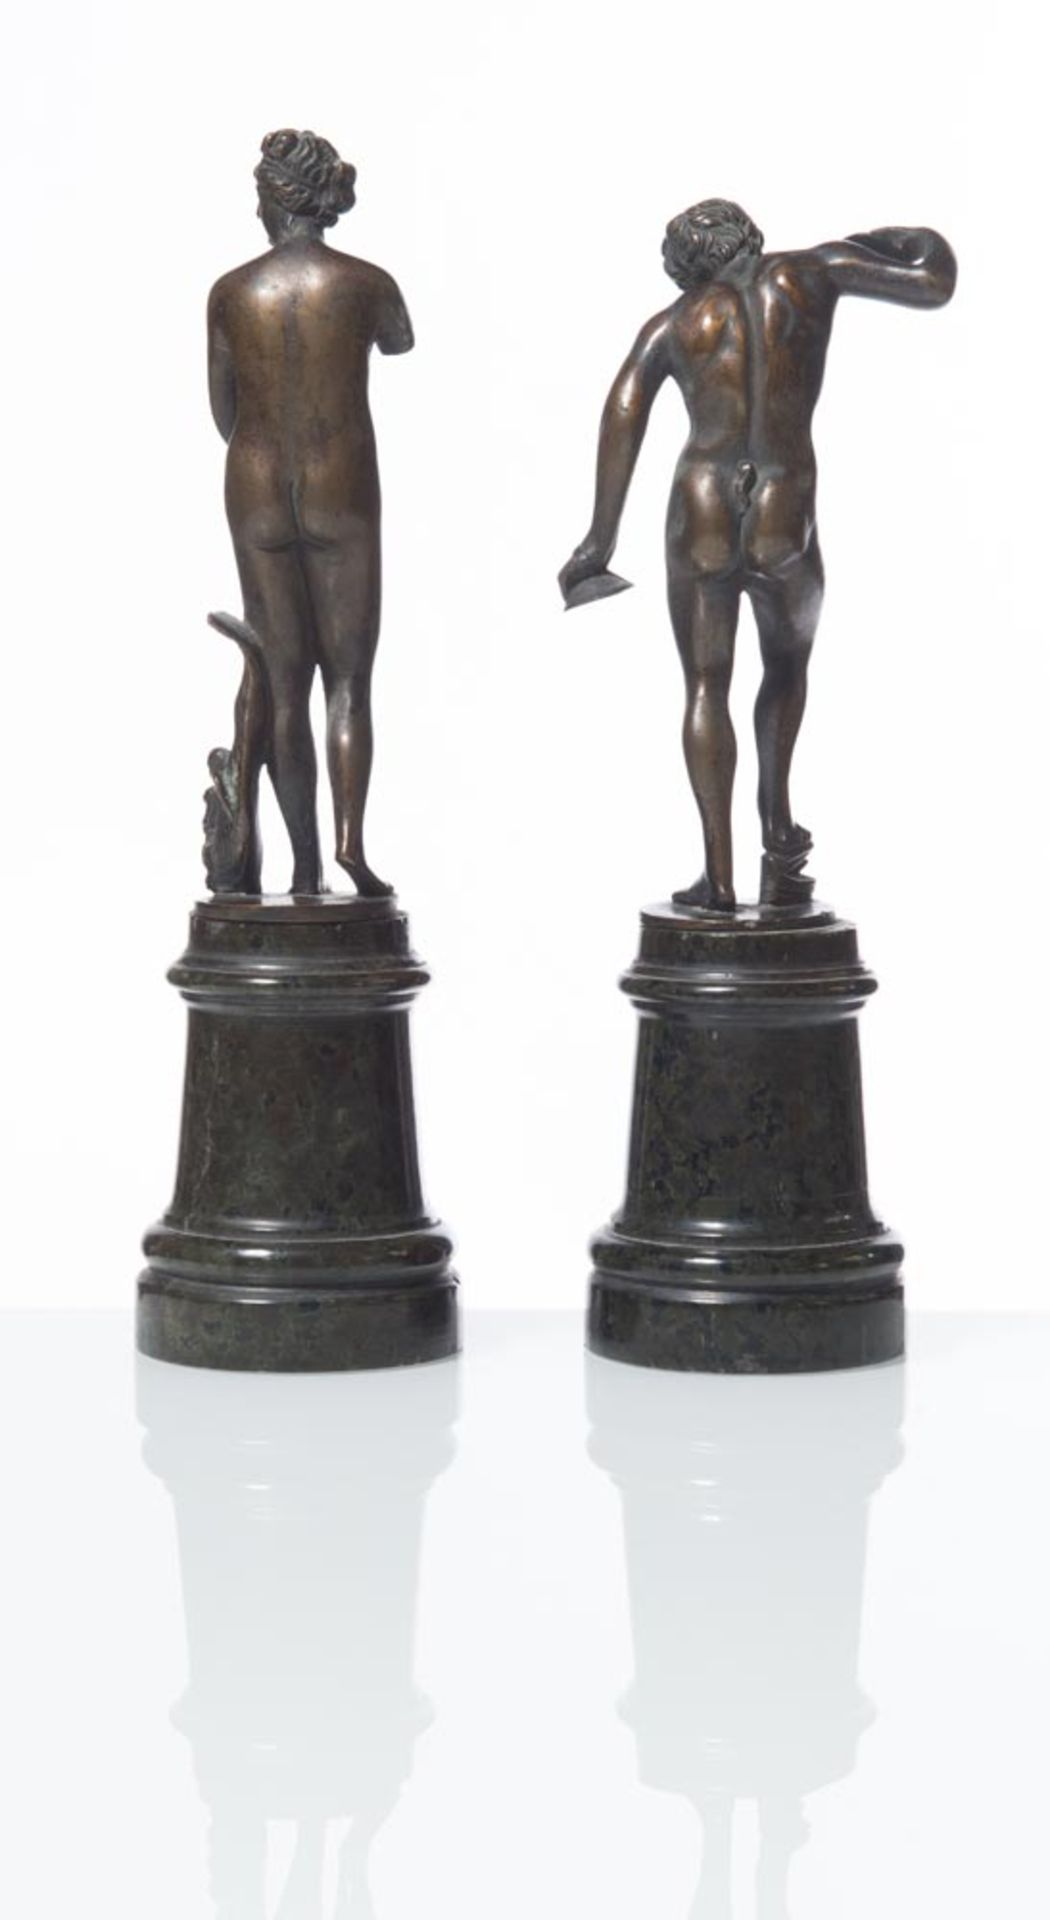 Pair of bronze sculpture, "Venere Anadiomene" - "Pan suona i cimbali", late 18th-early 19th Century - Image 2 of 2